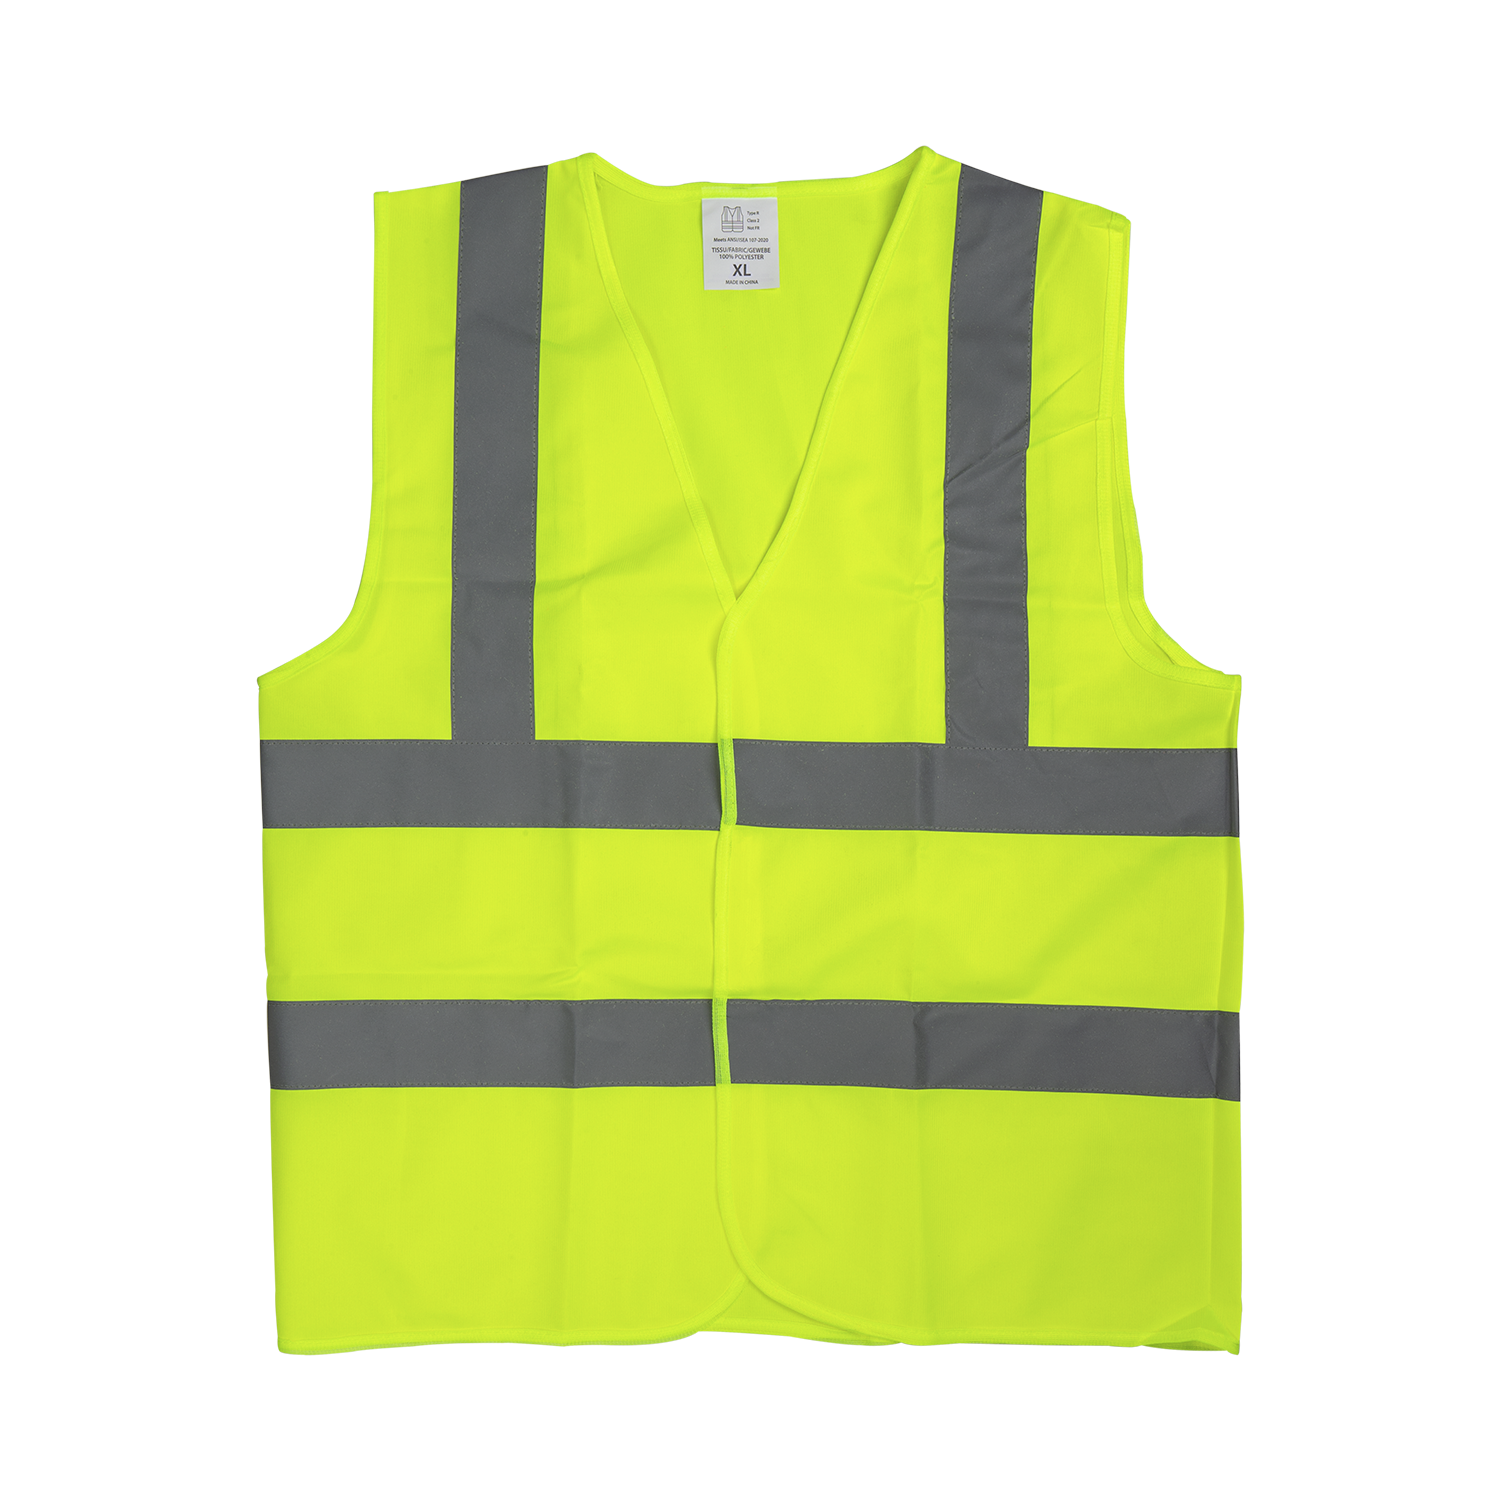 Karat High Visibility Reflective Safety Vest with Velcro Fastening (Ye